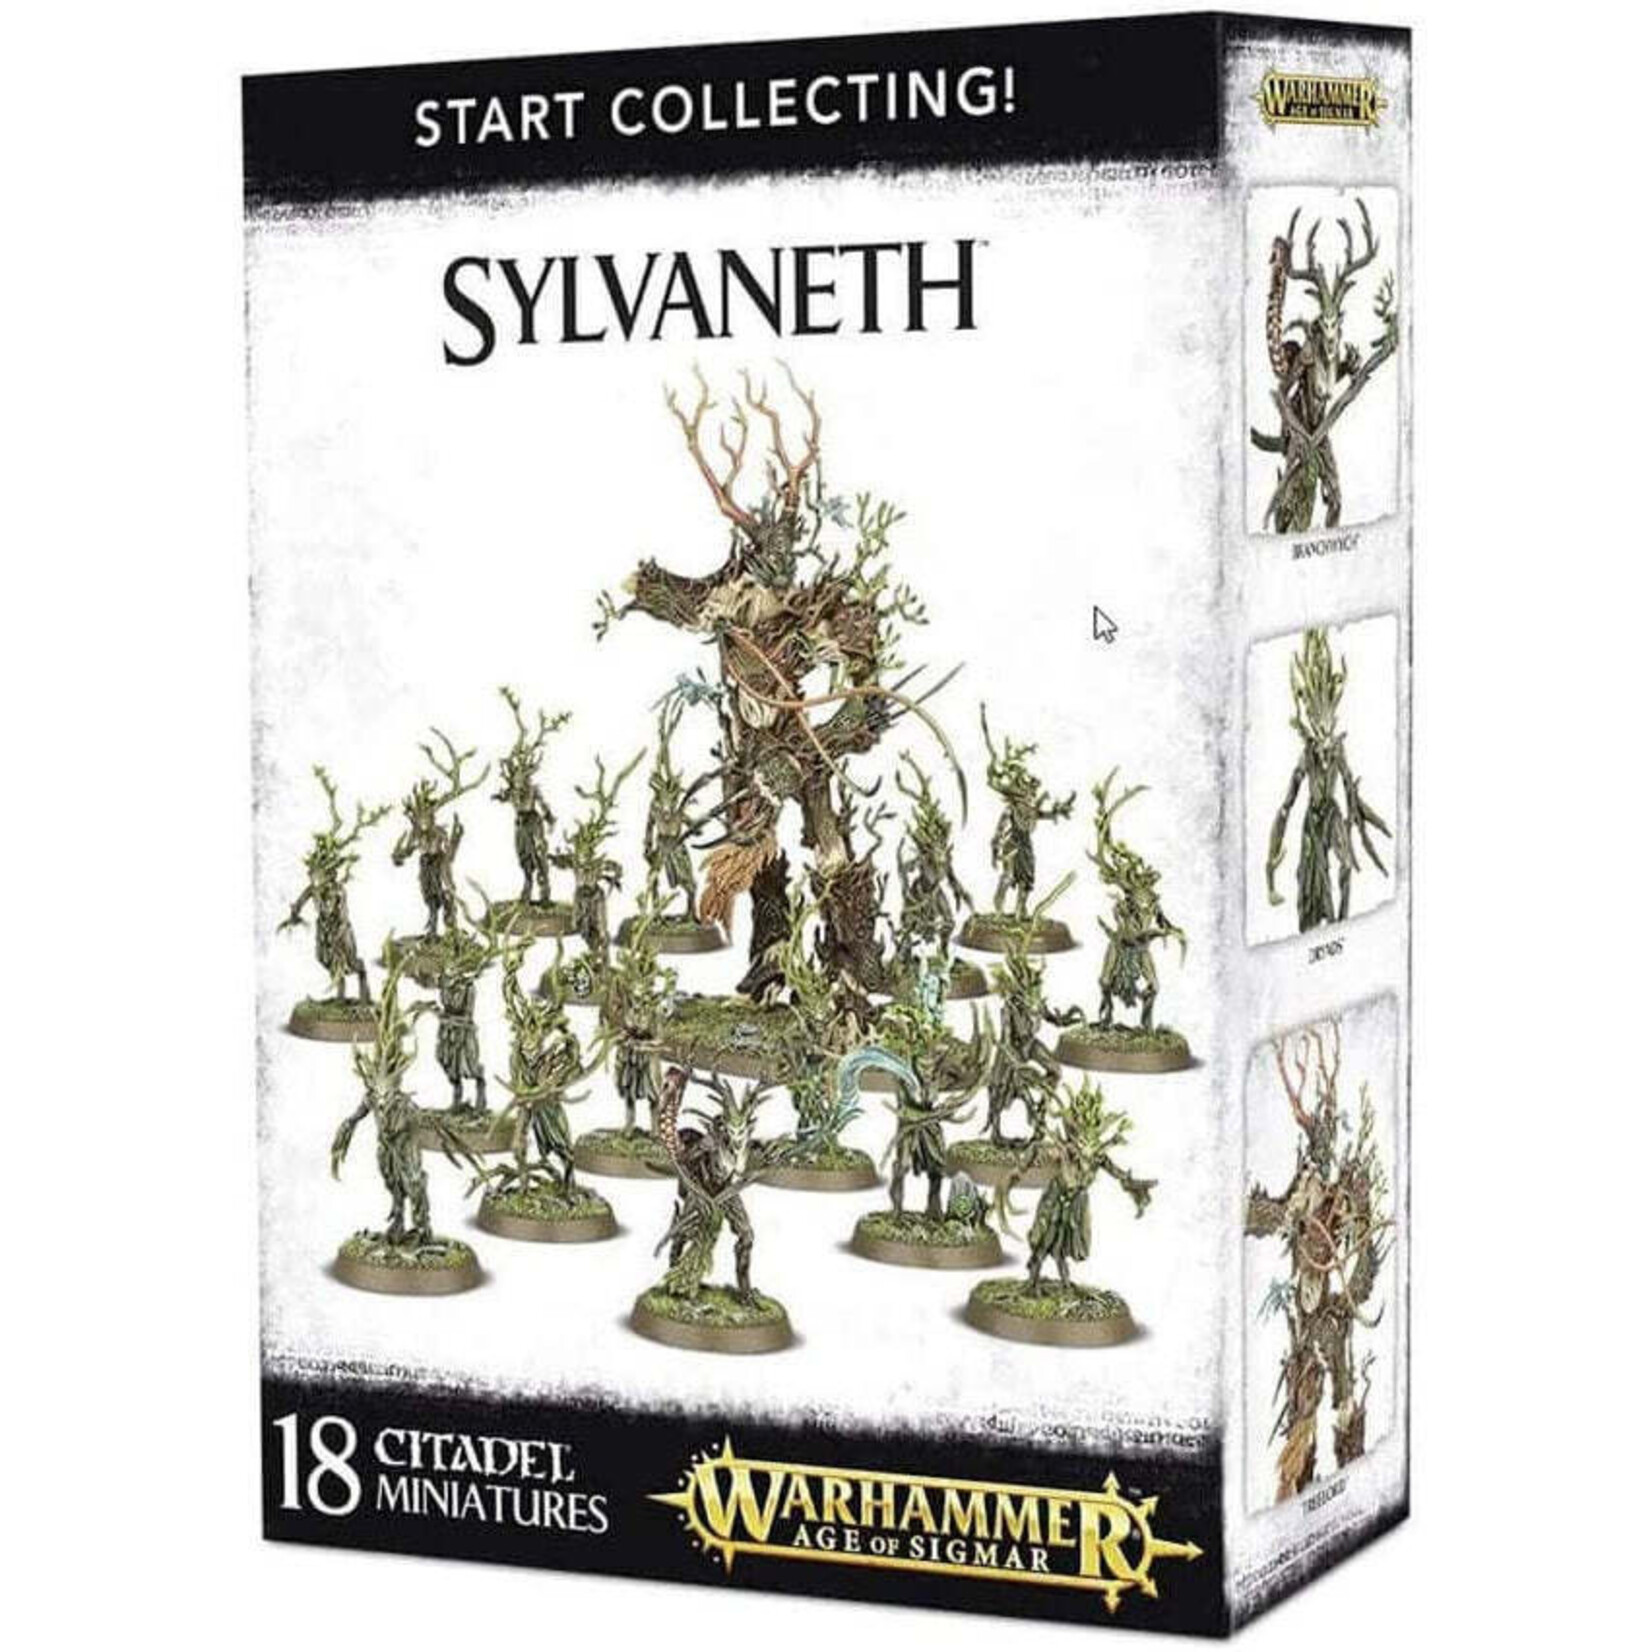 Warhammer: age of sigmar Warhammer Age of Sigmar - Sylvaneth: Start Collecting